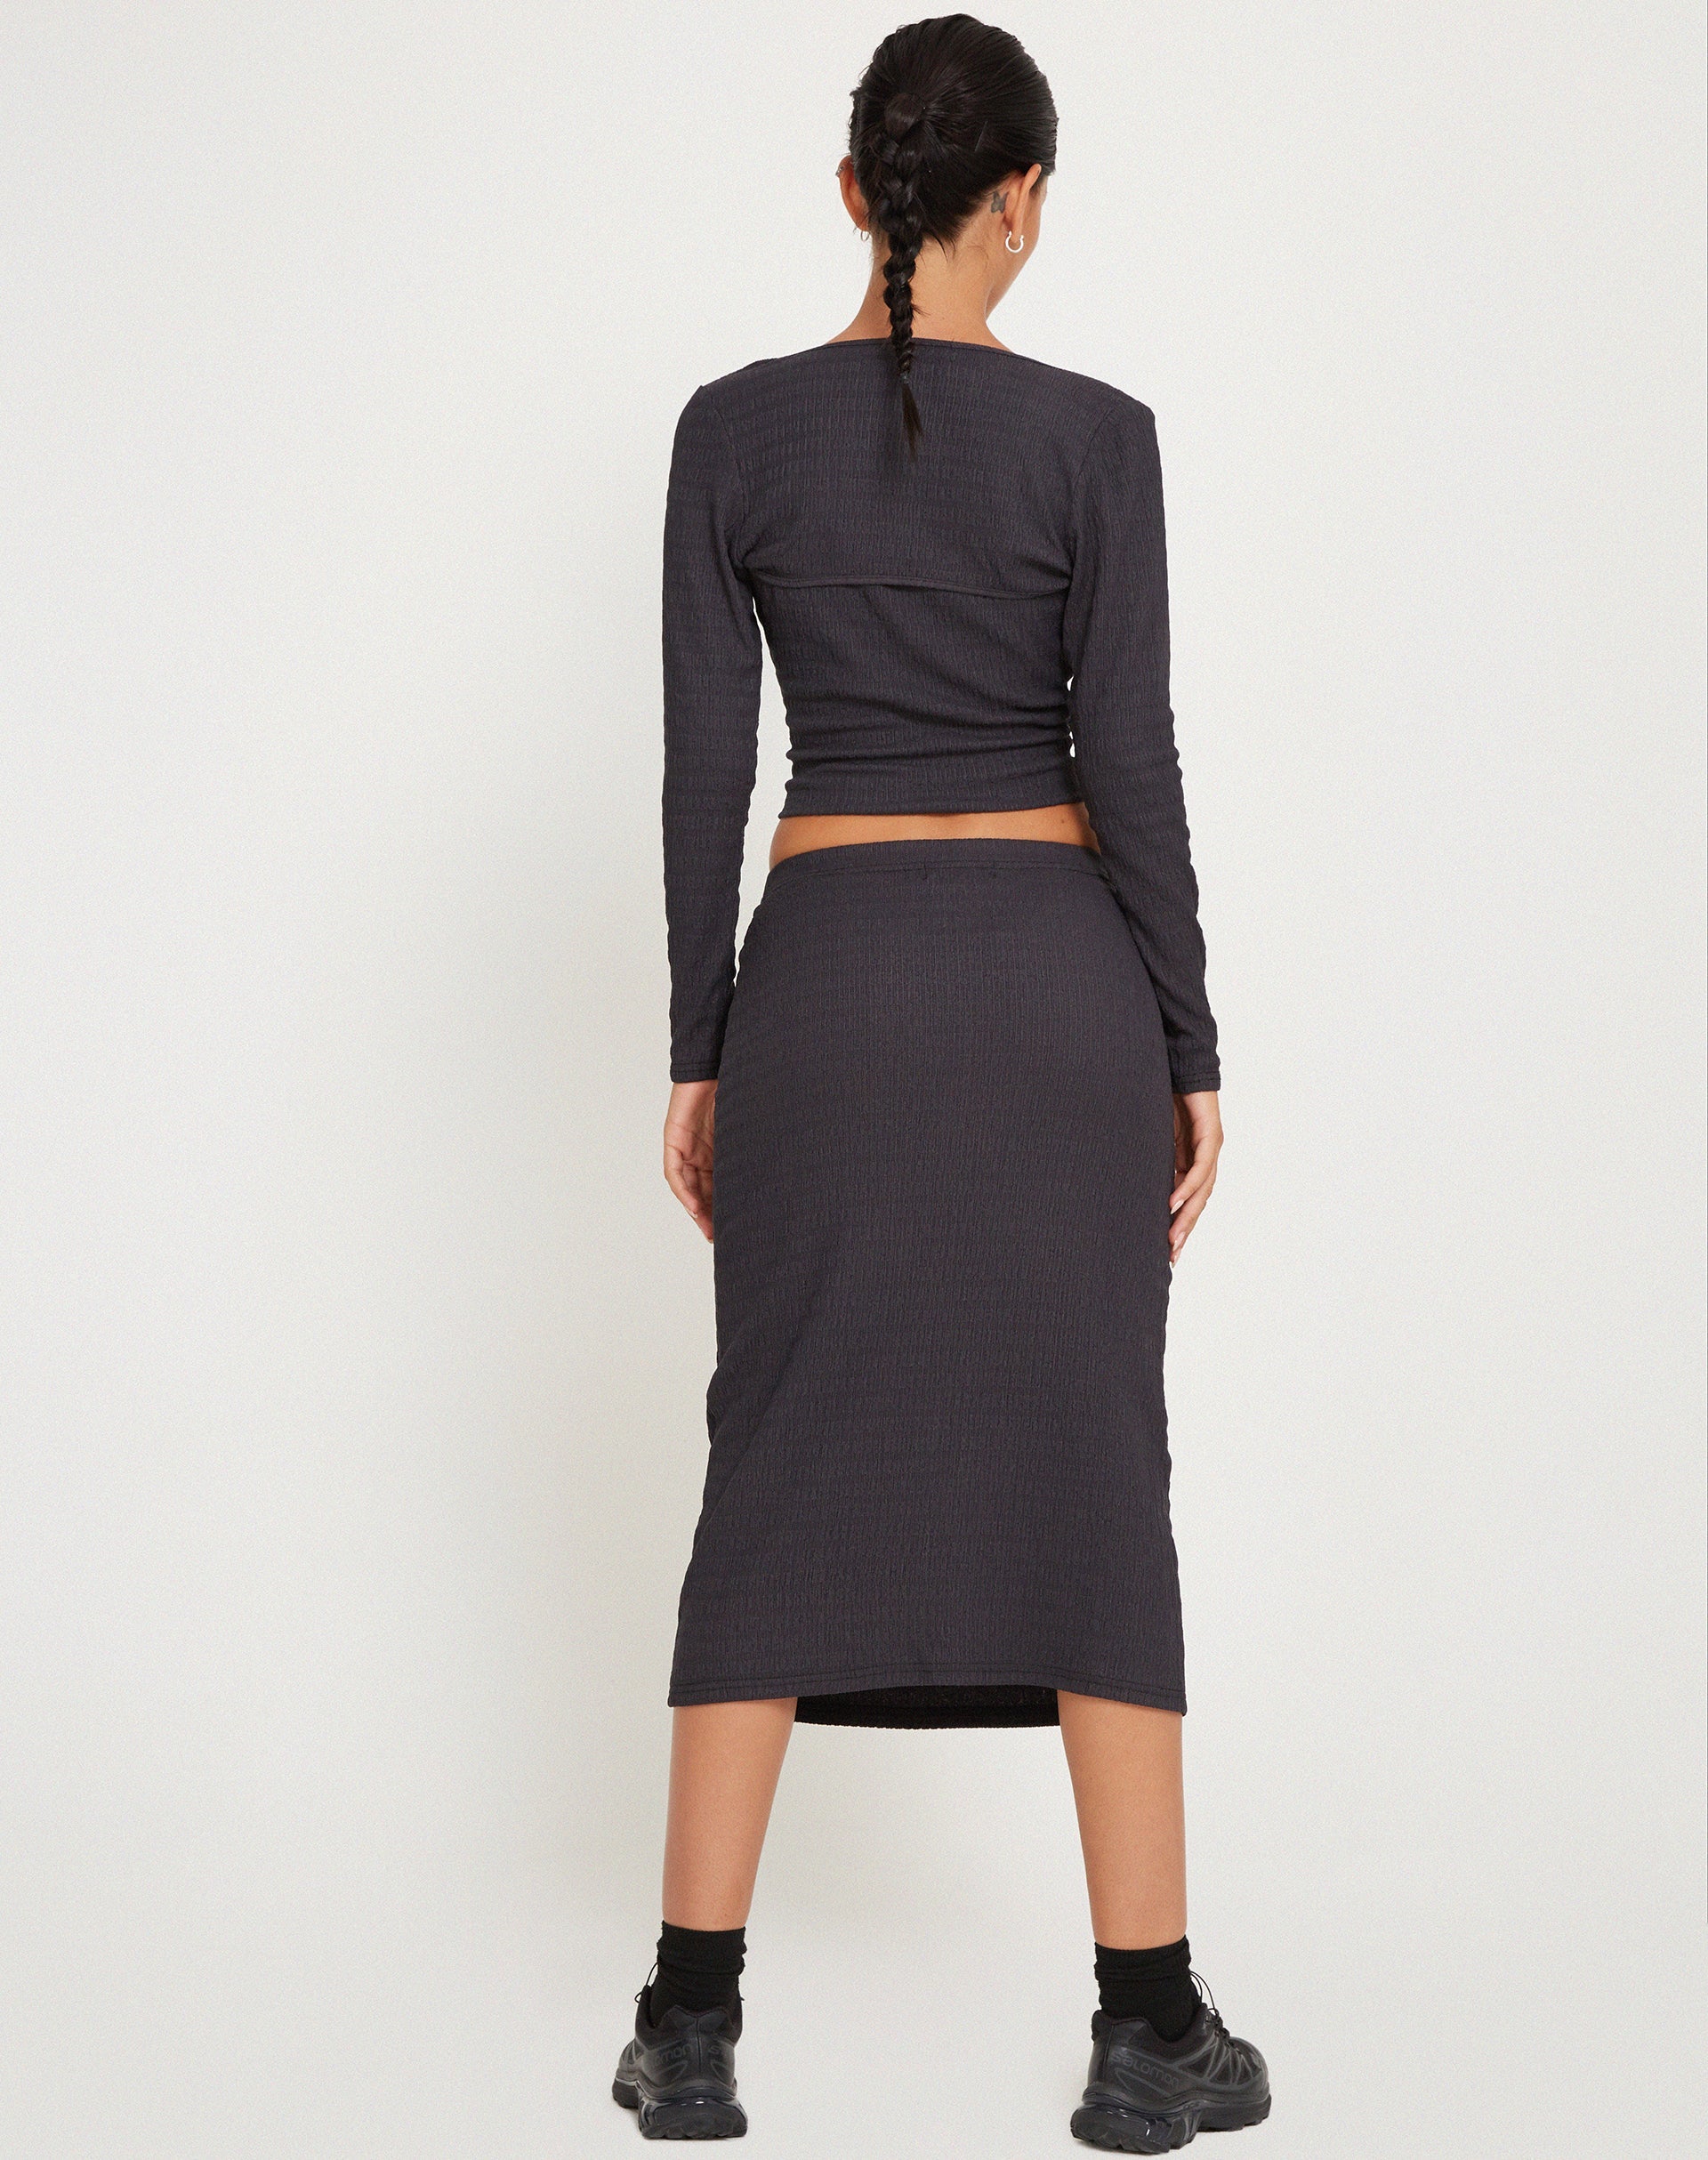 image of Hadley Midi Skirt in Crinkle Charcoal